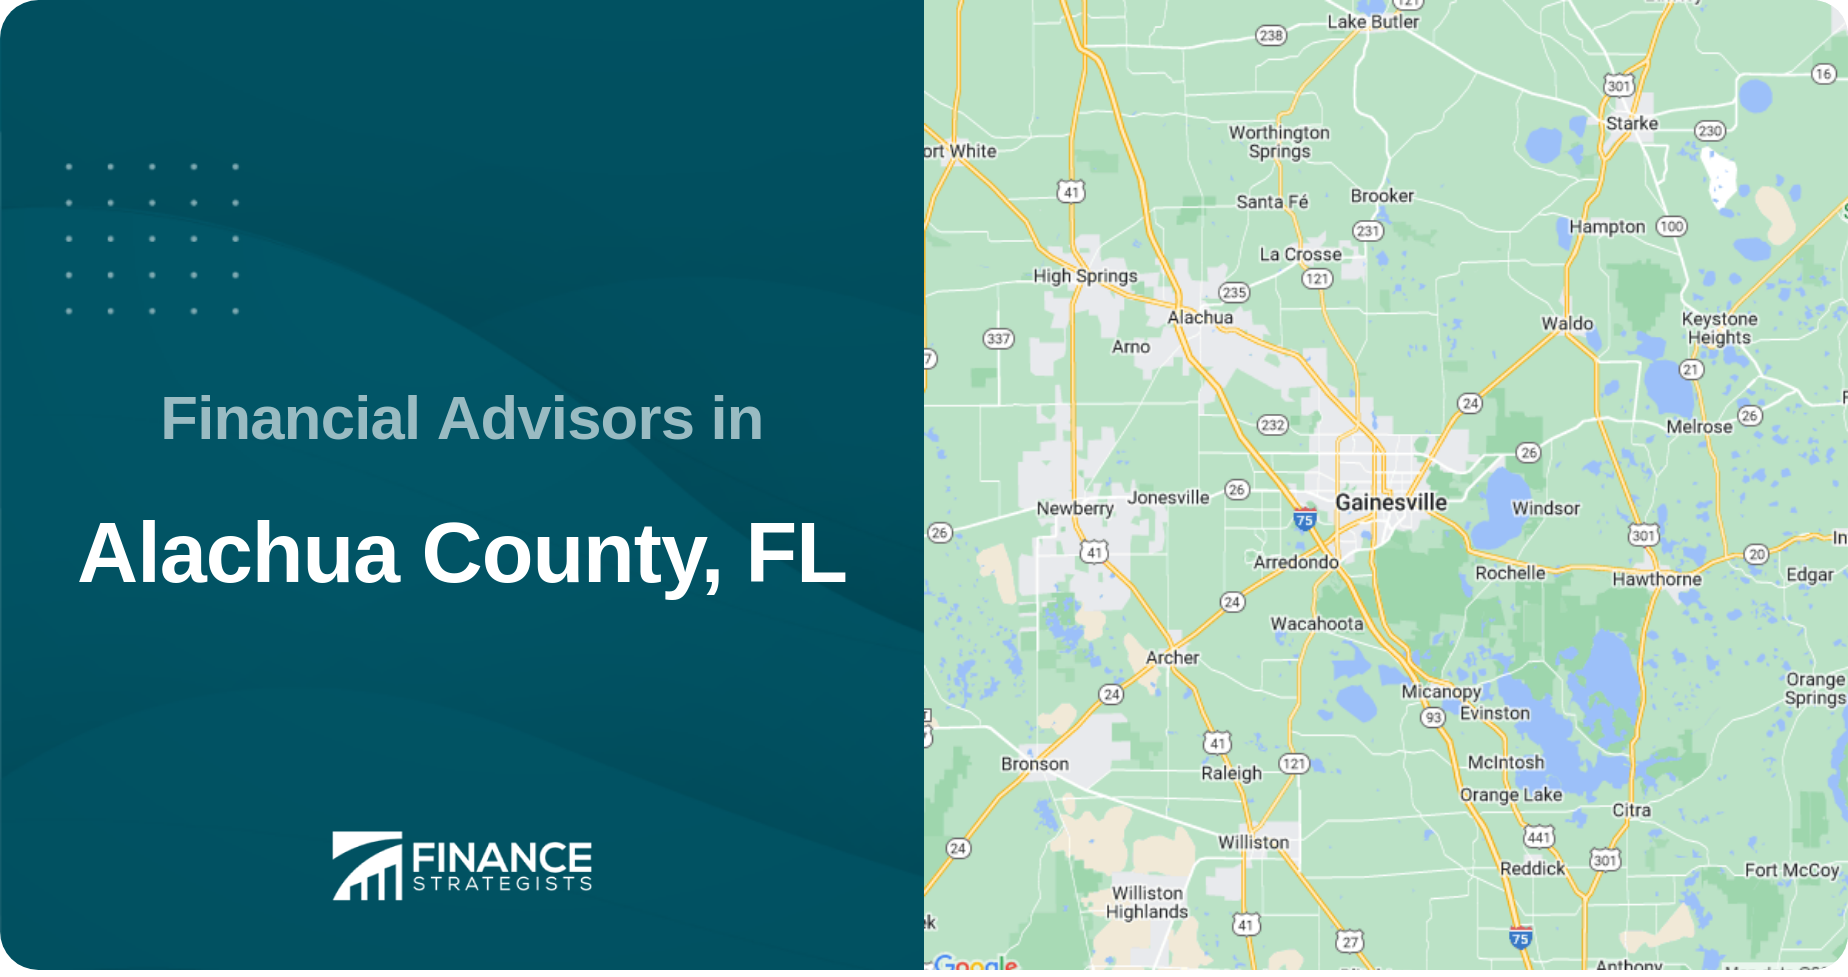 Financial Advisors in Alachua County, FL